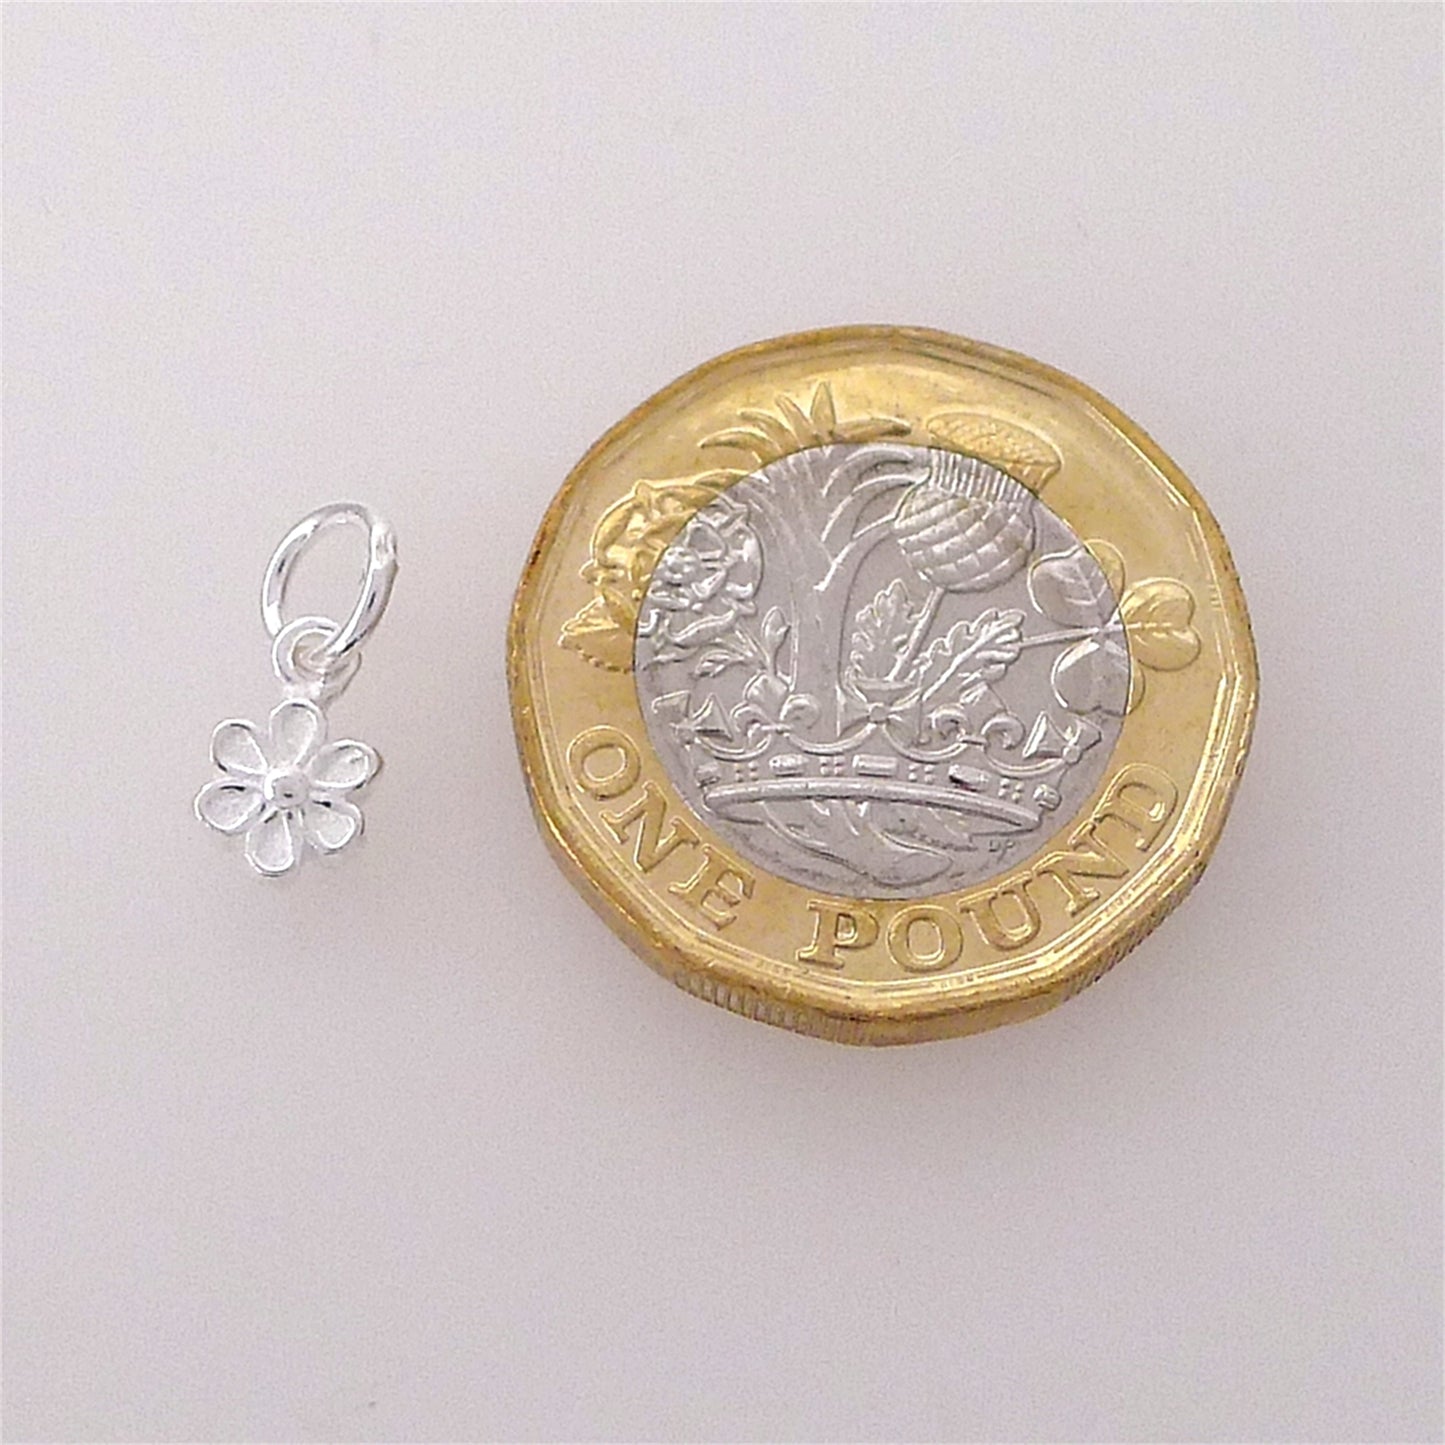 2 Sterling Silver Flower Daisy Charm Pendants for Necklace or Bracelet - sugarkittenlondon